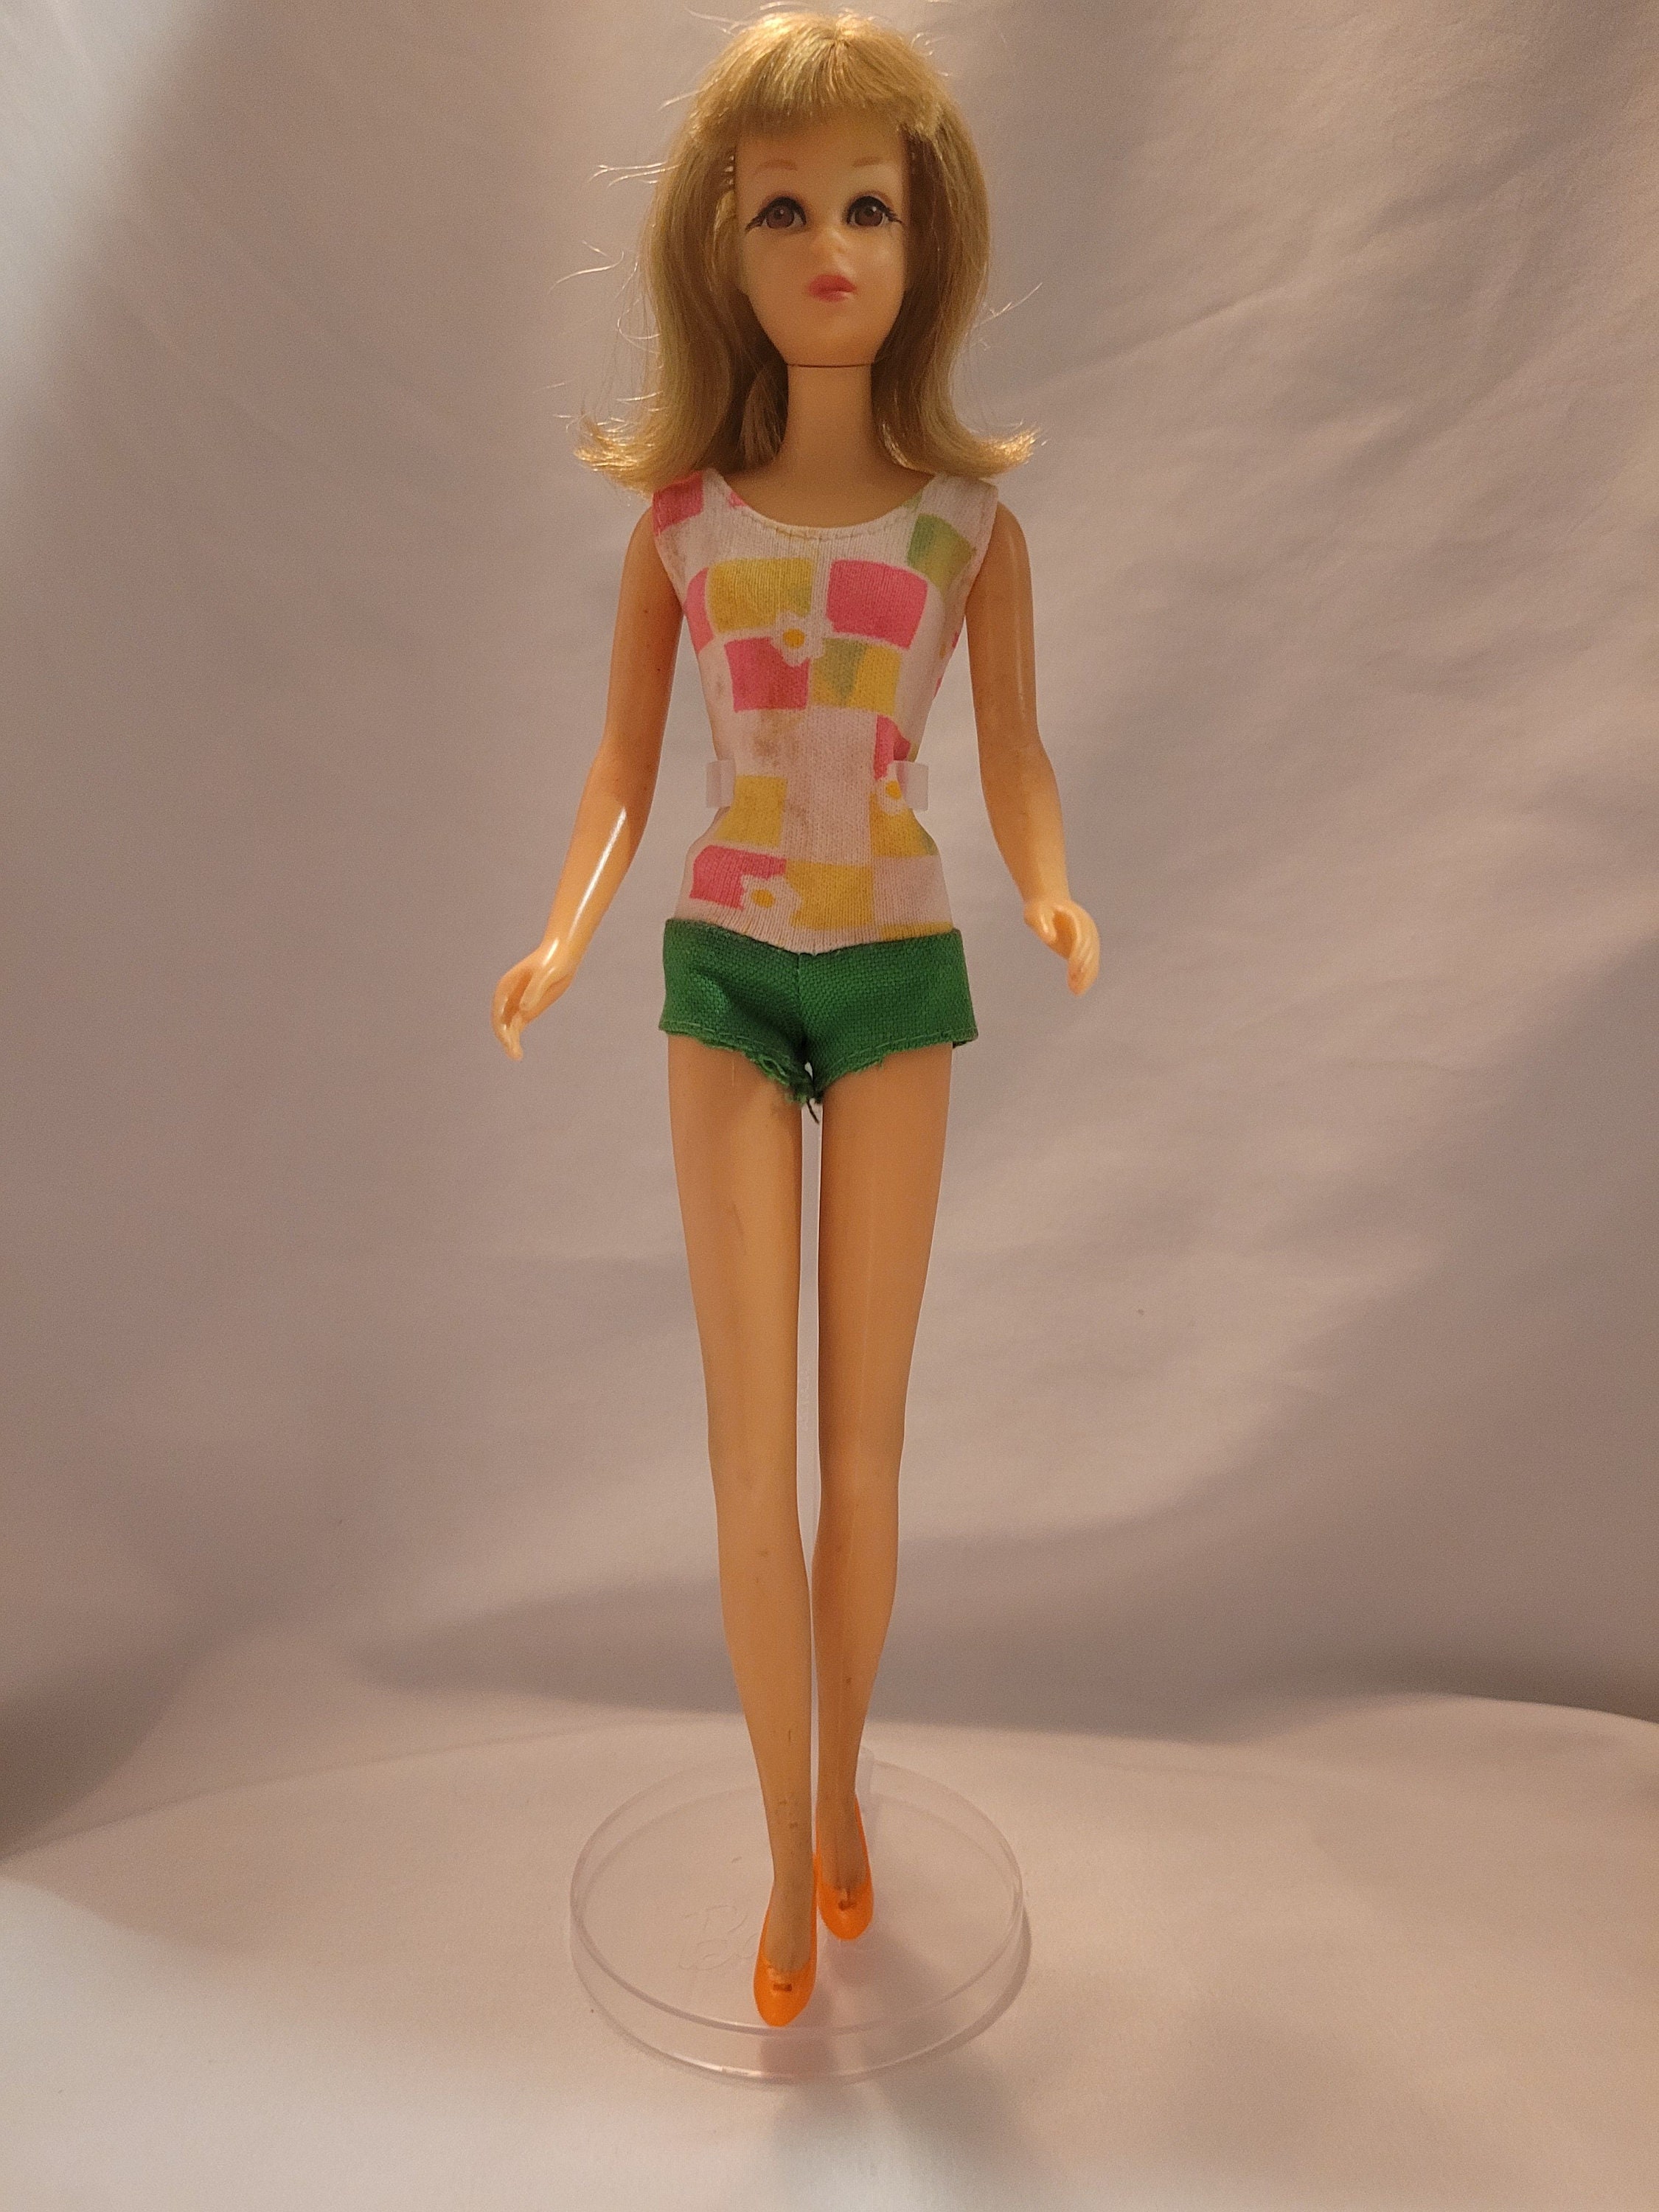 Original Barbie Doll Hair Brush Mini Barbie Comb Barbie Miniature